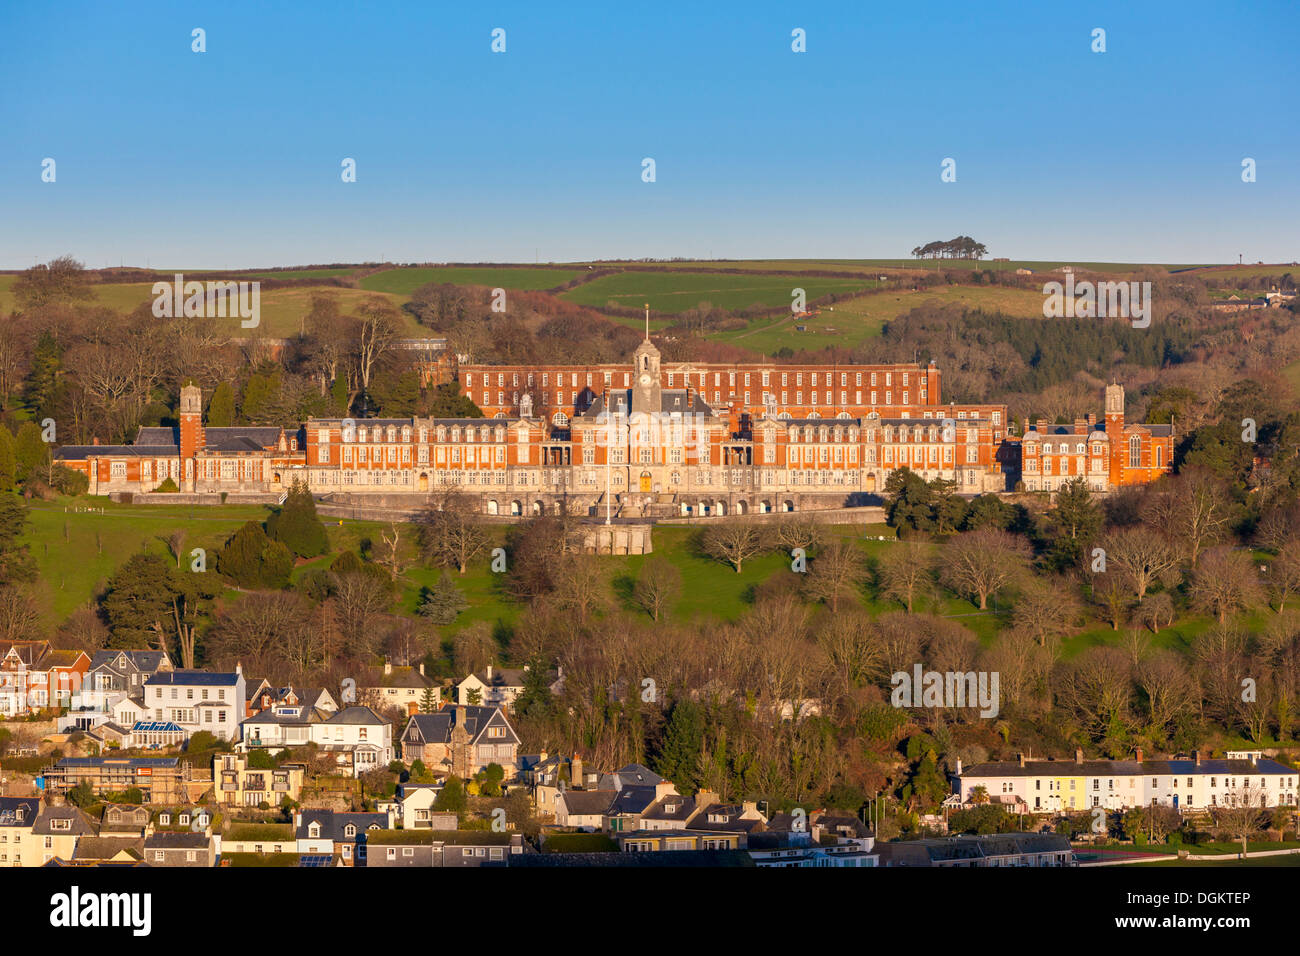 Royal Naval College von Sir Aston Webb entworfen. Stockfoto